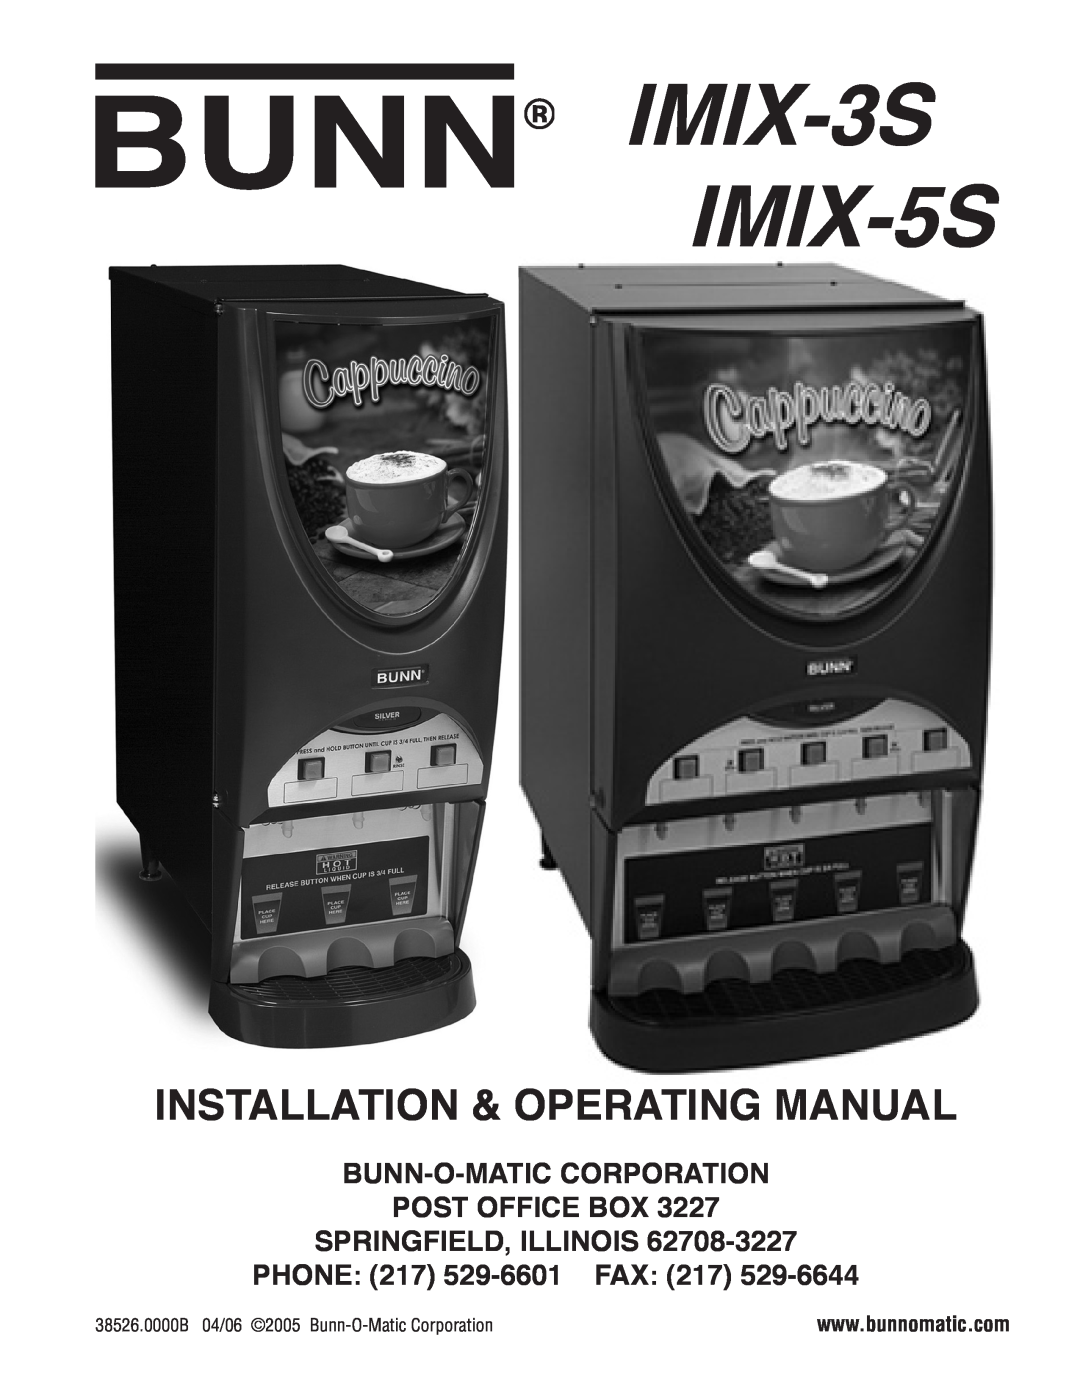 Bunn manual IMIX-3S IMIX-5S, Installation & Operating Manual, PHONE 217 529-6601 FAX 